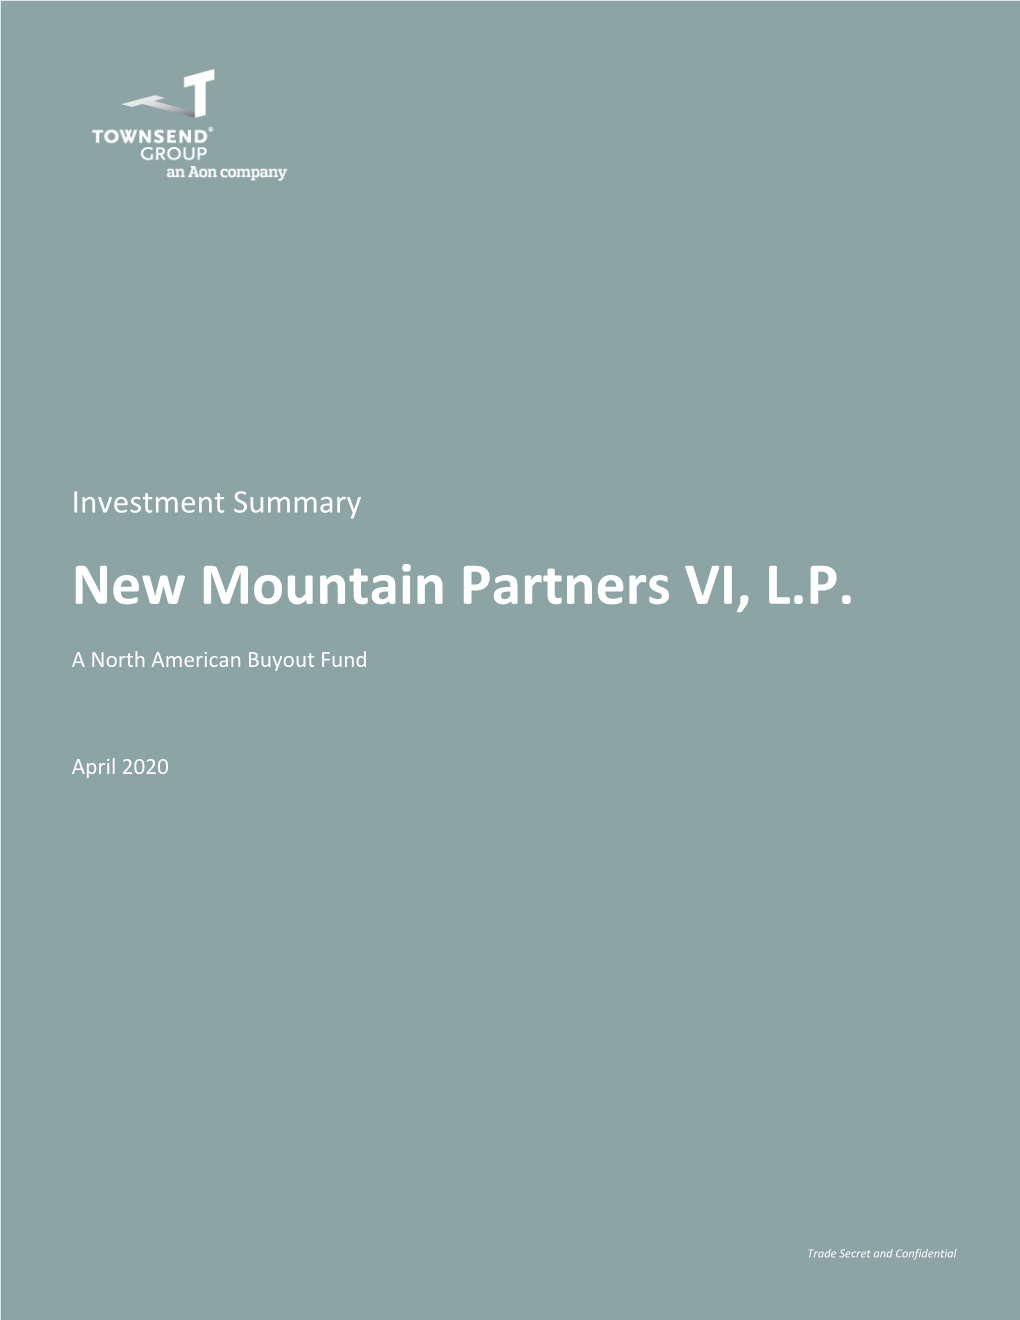 New Mountain Partners VI, LP